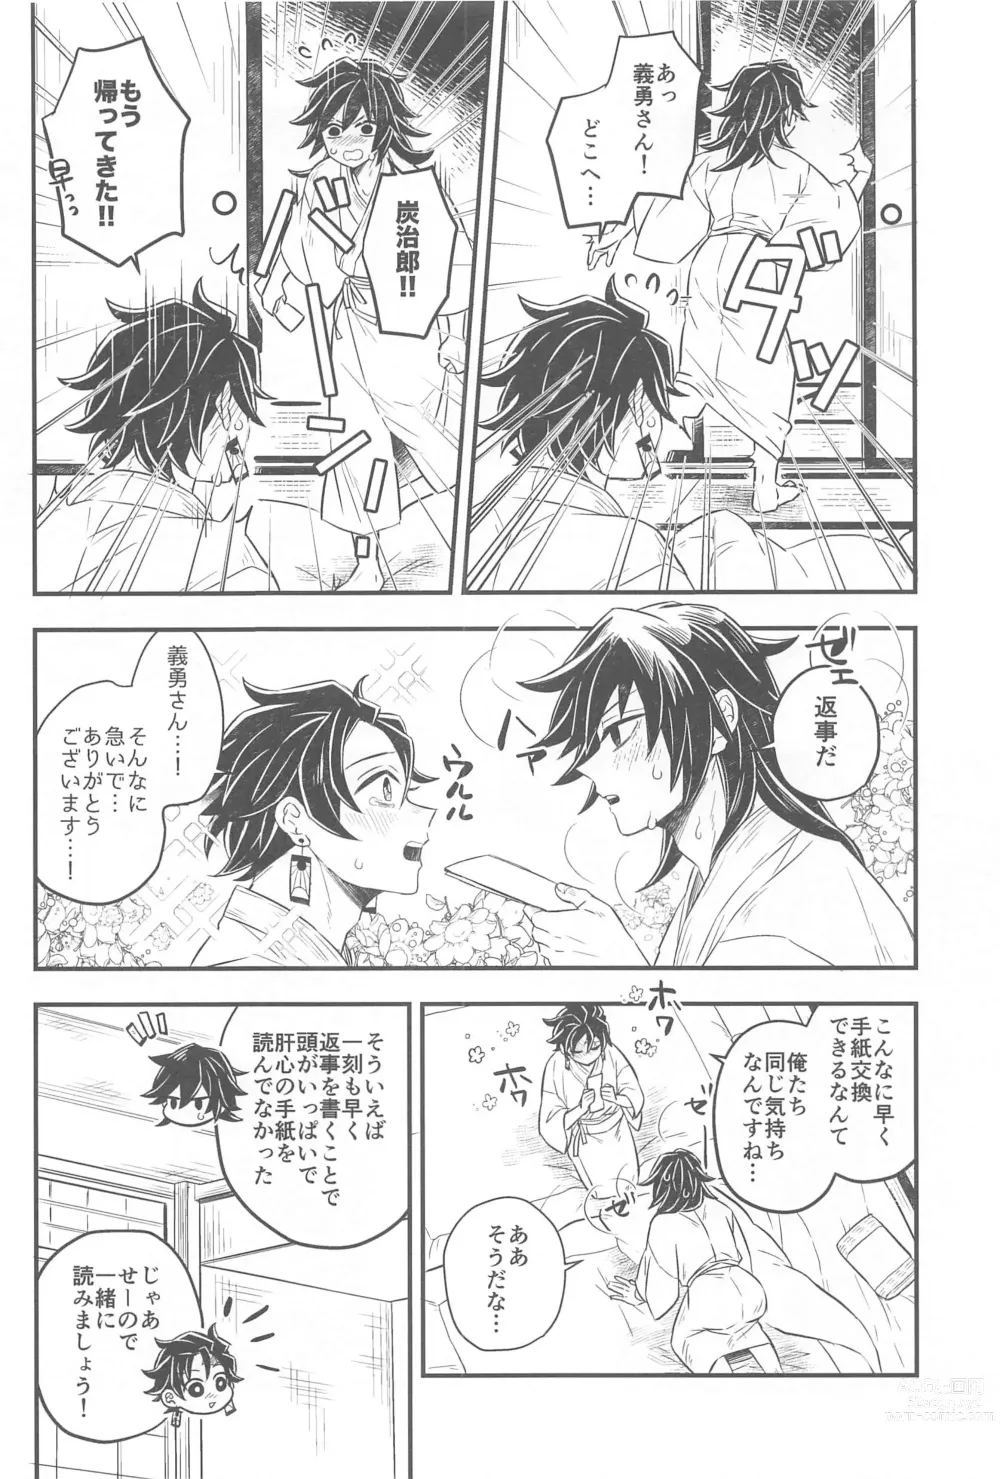 Page 13 of doujinshi Shoya no Yokuasa - the morning after the first night